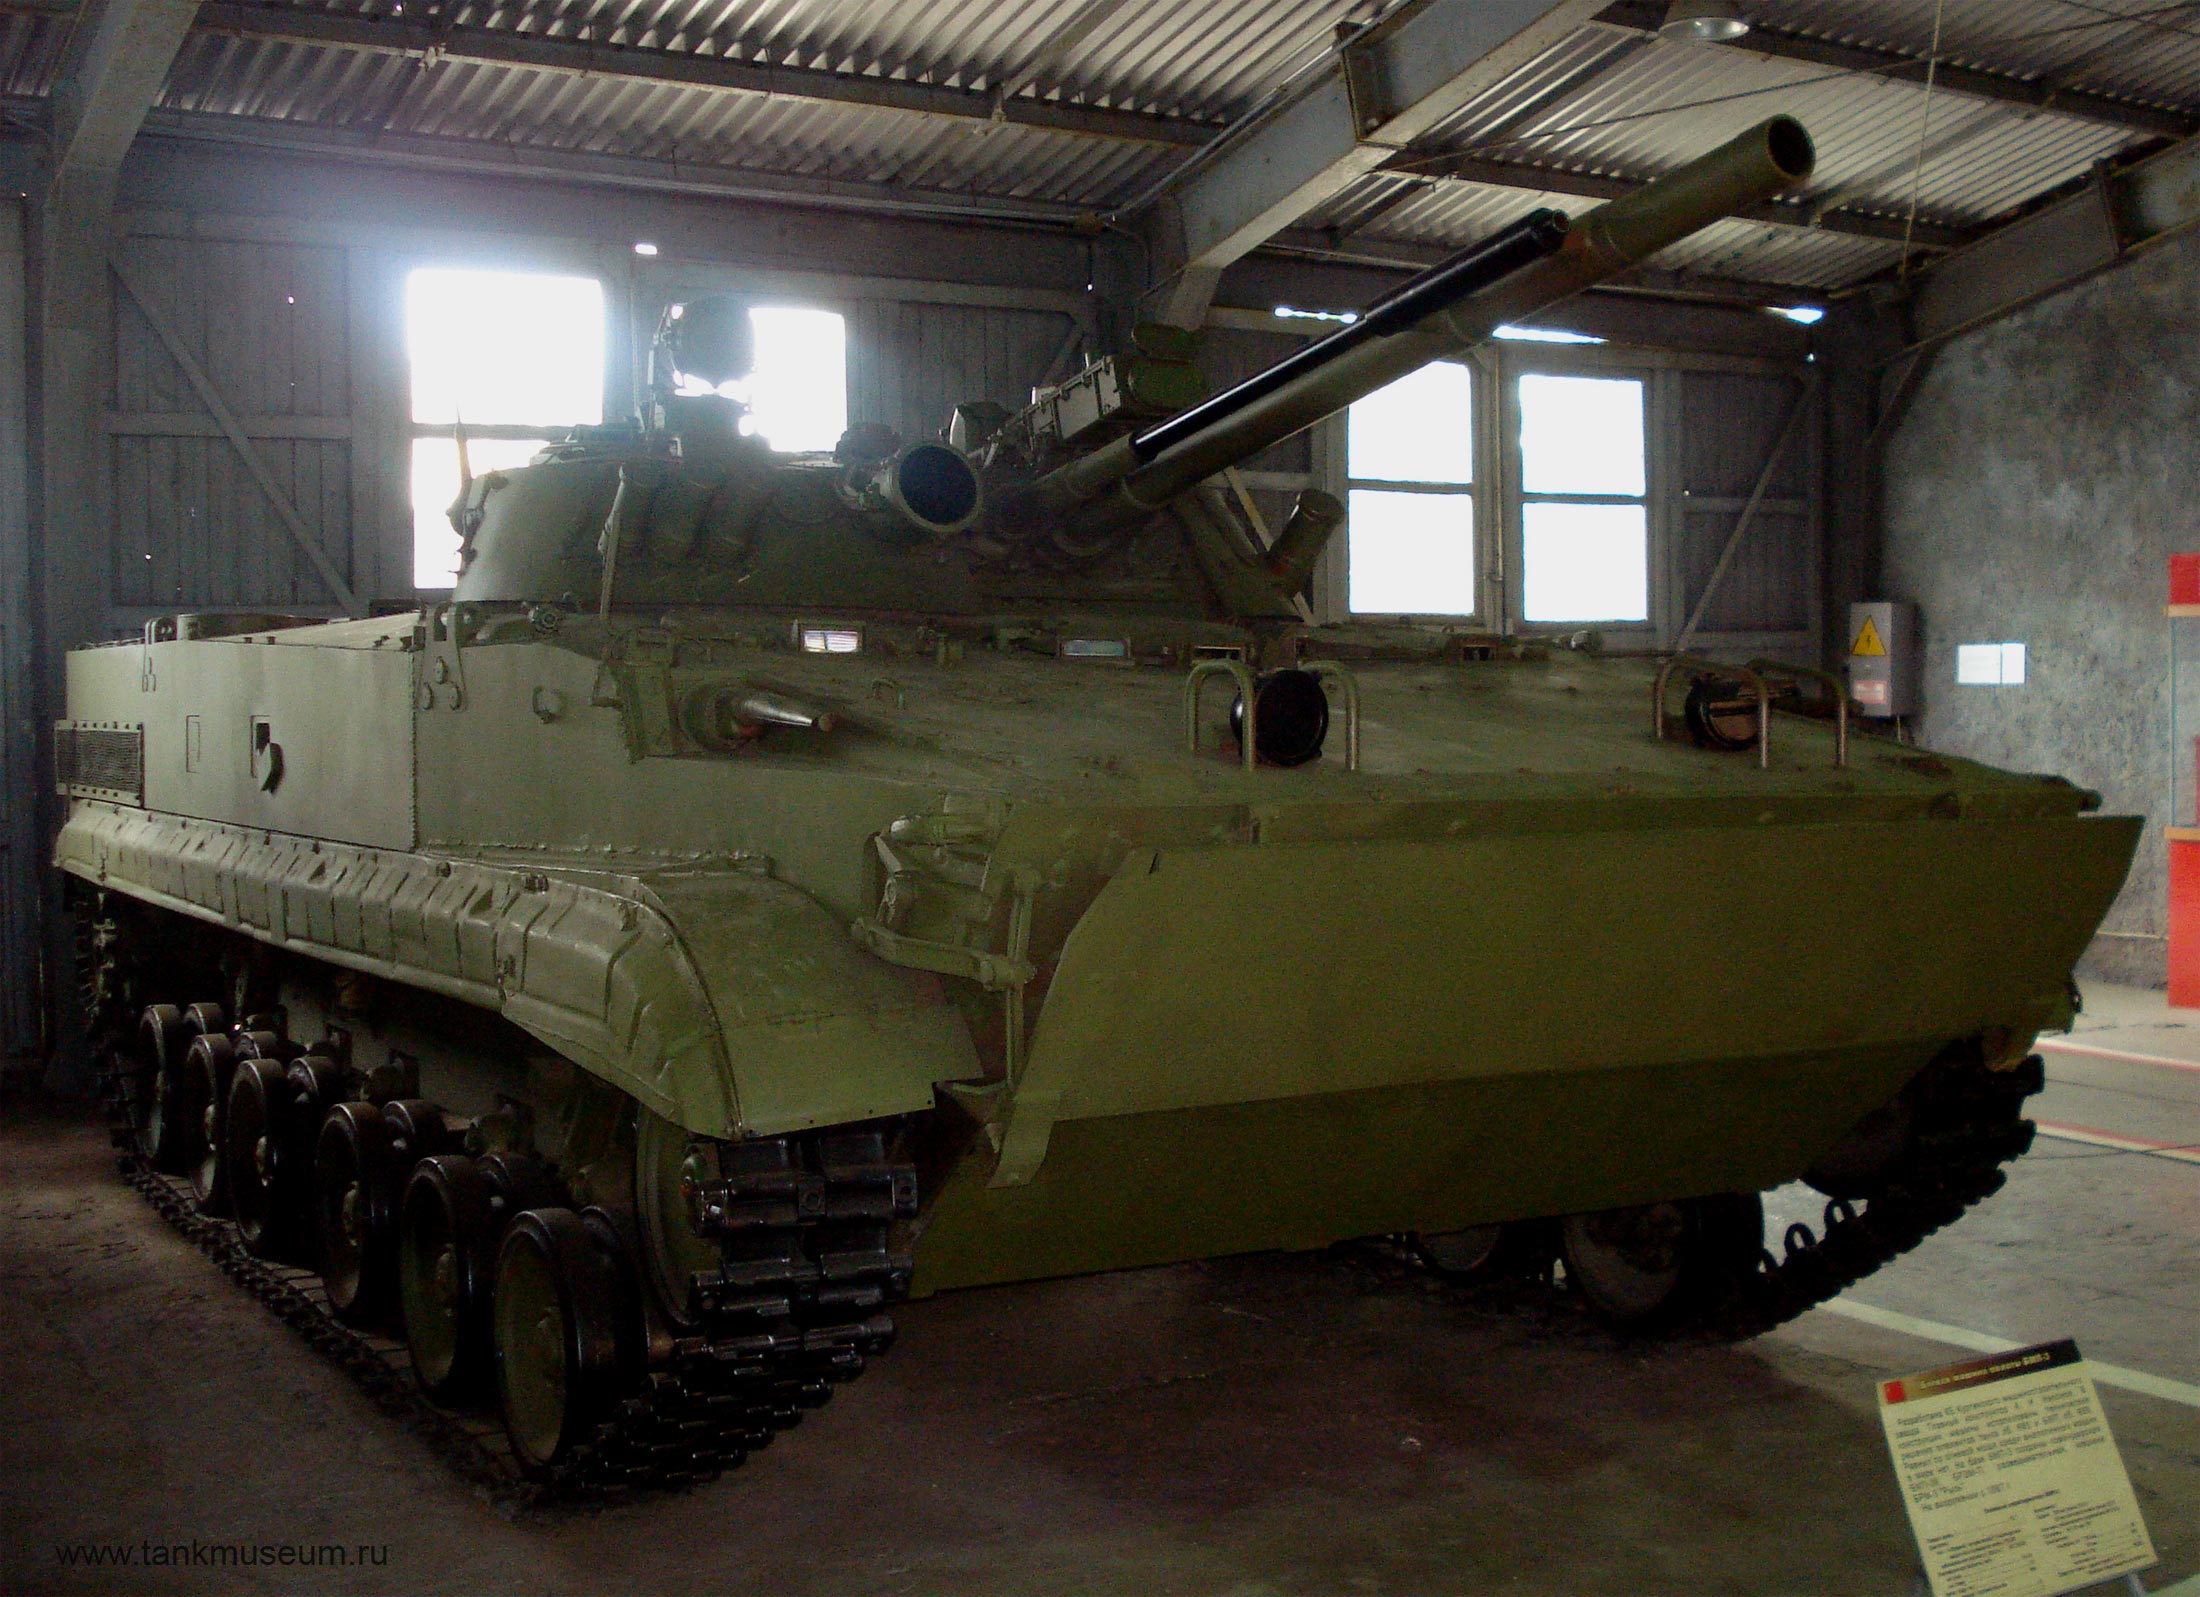 Kubinka tank museum BMP-3 infantry fighting vehicle.